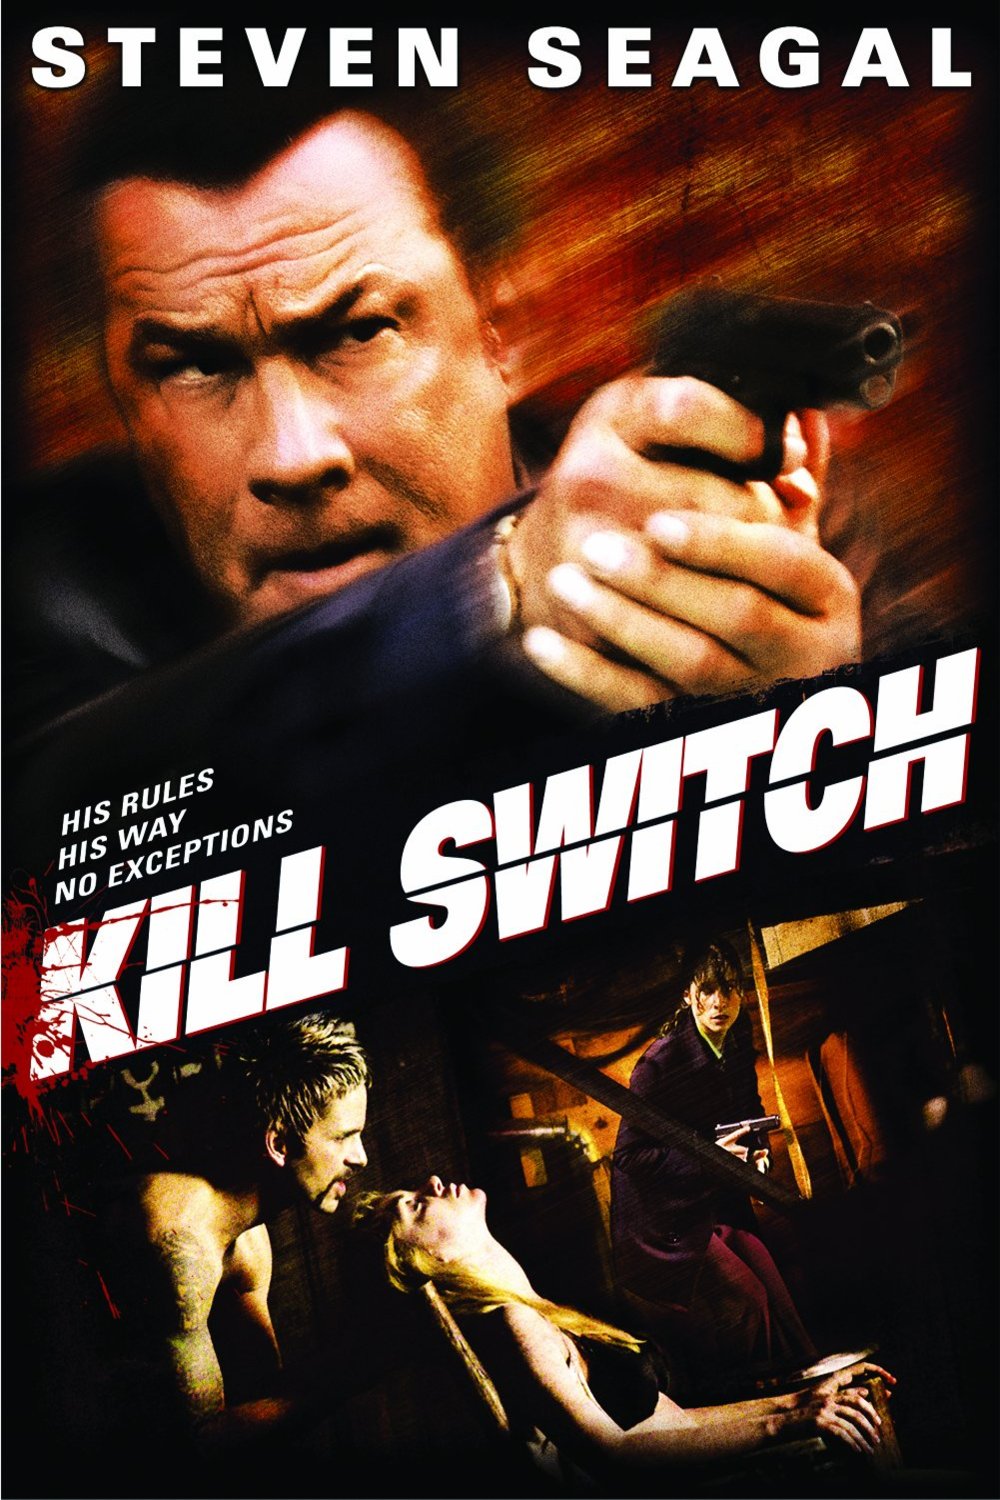 L'affiche du film Kill Switch